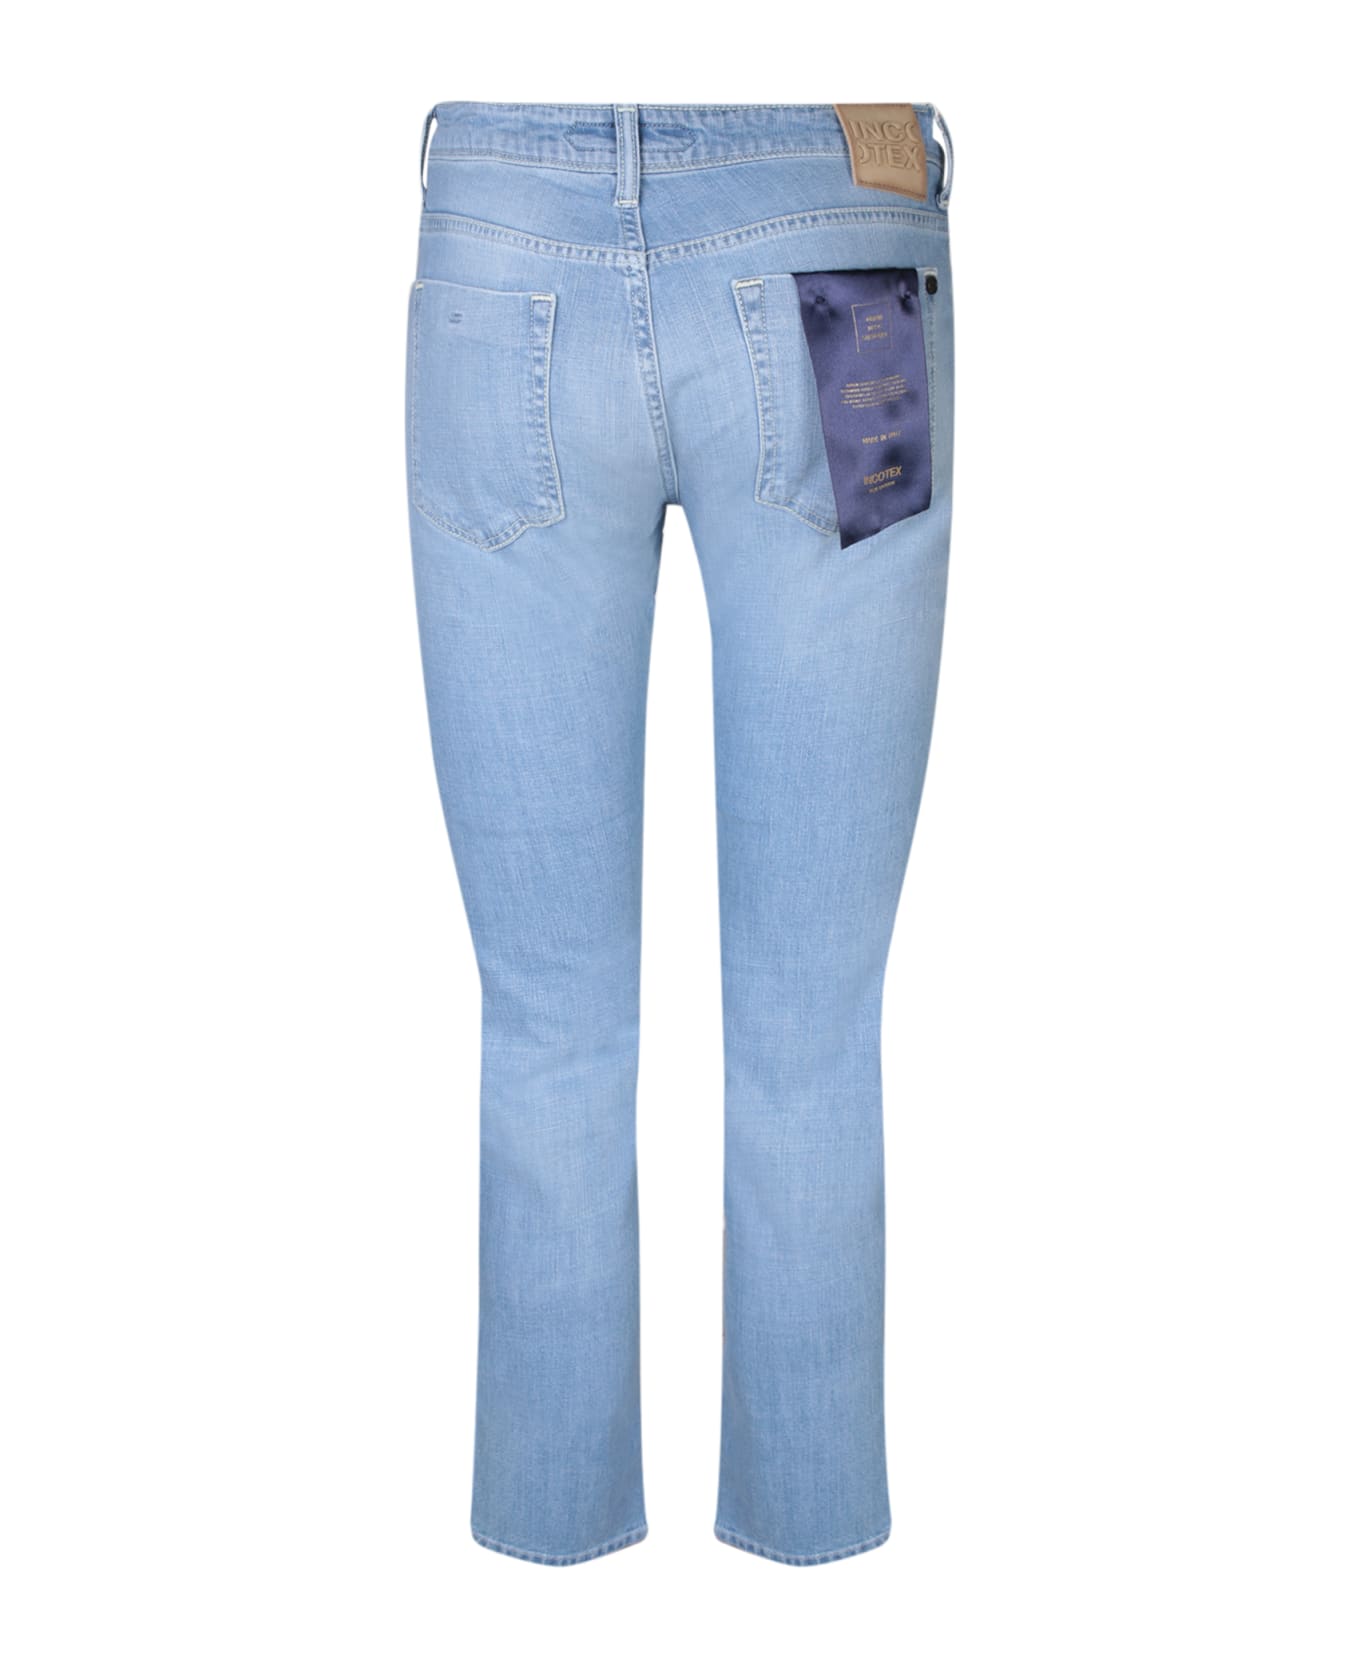 Incotex 5t Blue Denim Jeans - Blue デニム